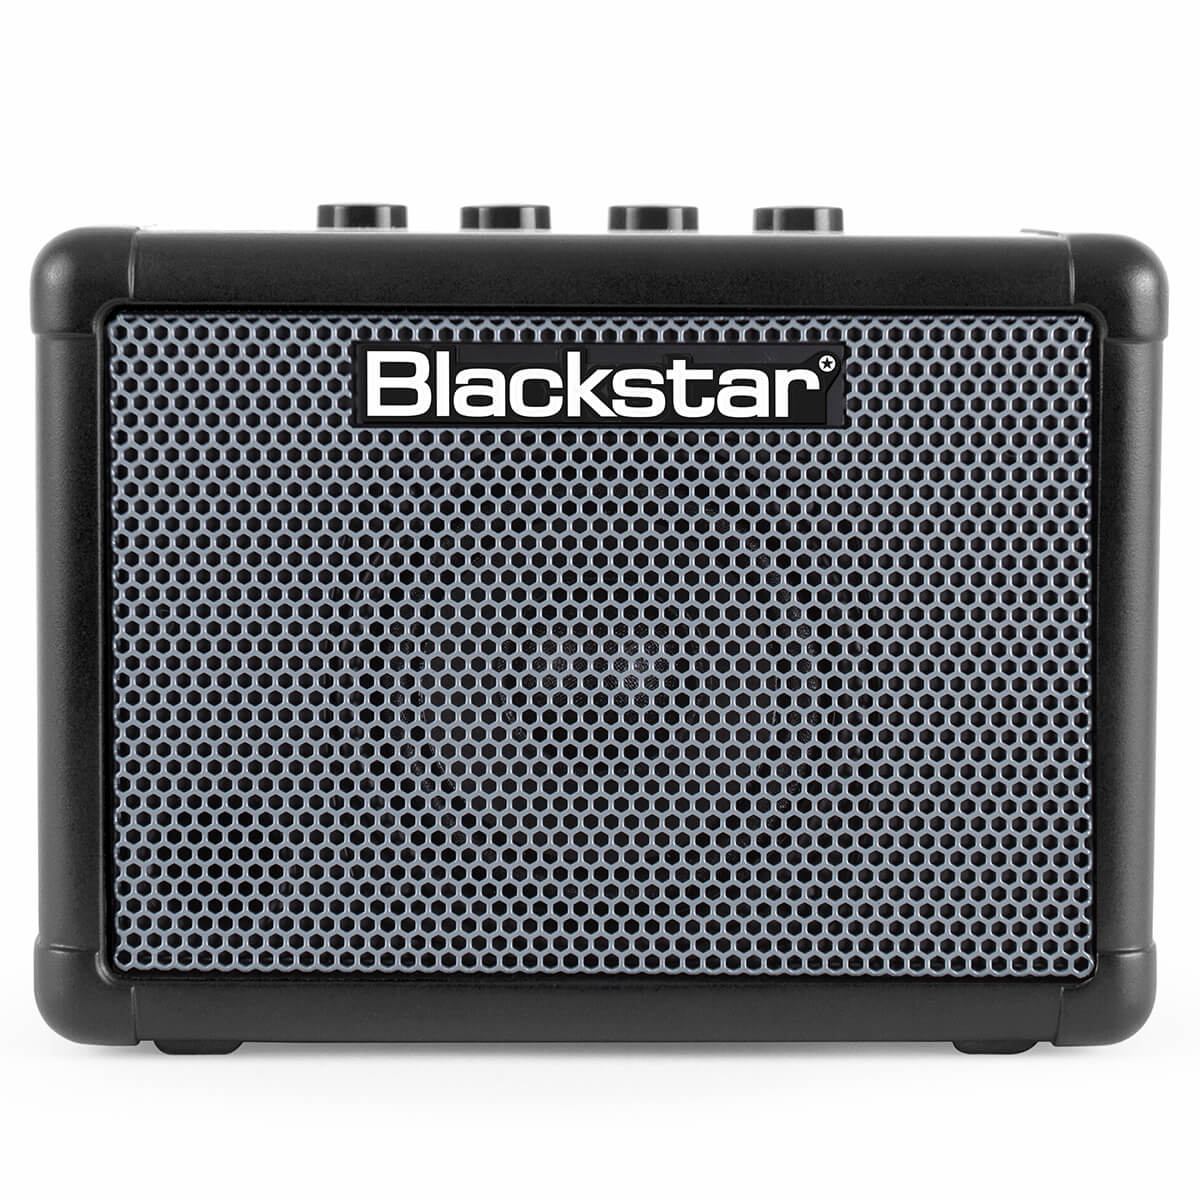 Blackstar Amps FLY 3 bass mini amplifier front